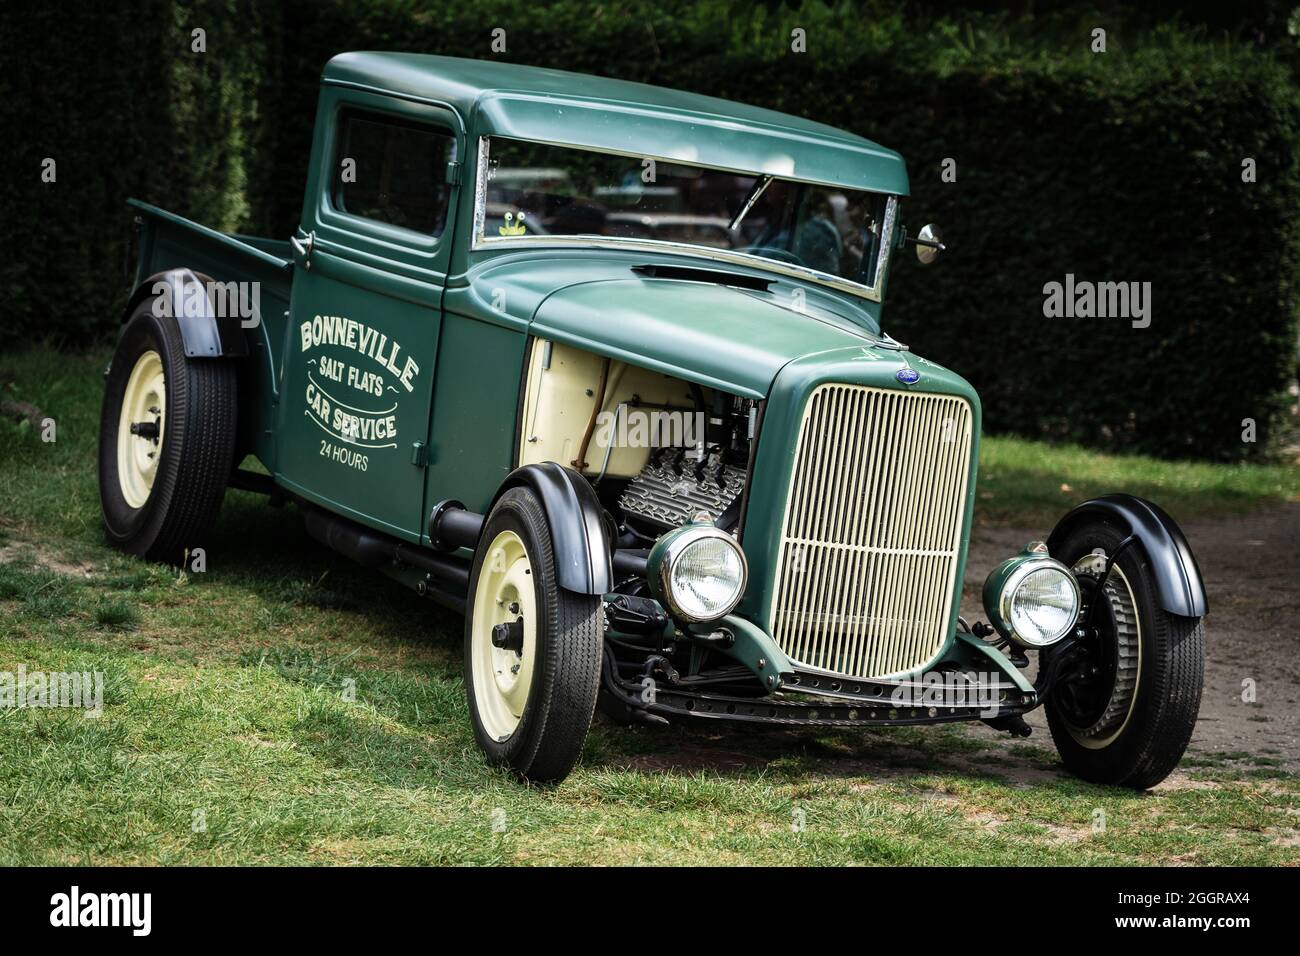 https://c8.alamy.com/comp/2GGRAX4/diedersdorf-germany-august-21-2021-the-vintage-car-ford-custom-pickup-1935-the-exhibition-of-us-car-classics-2GGRAX4.jpg